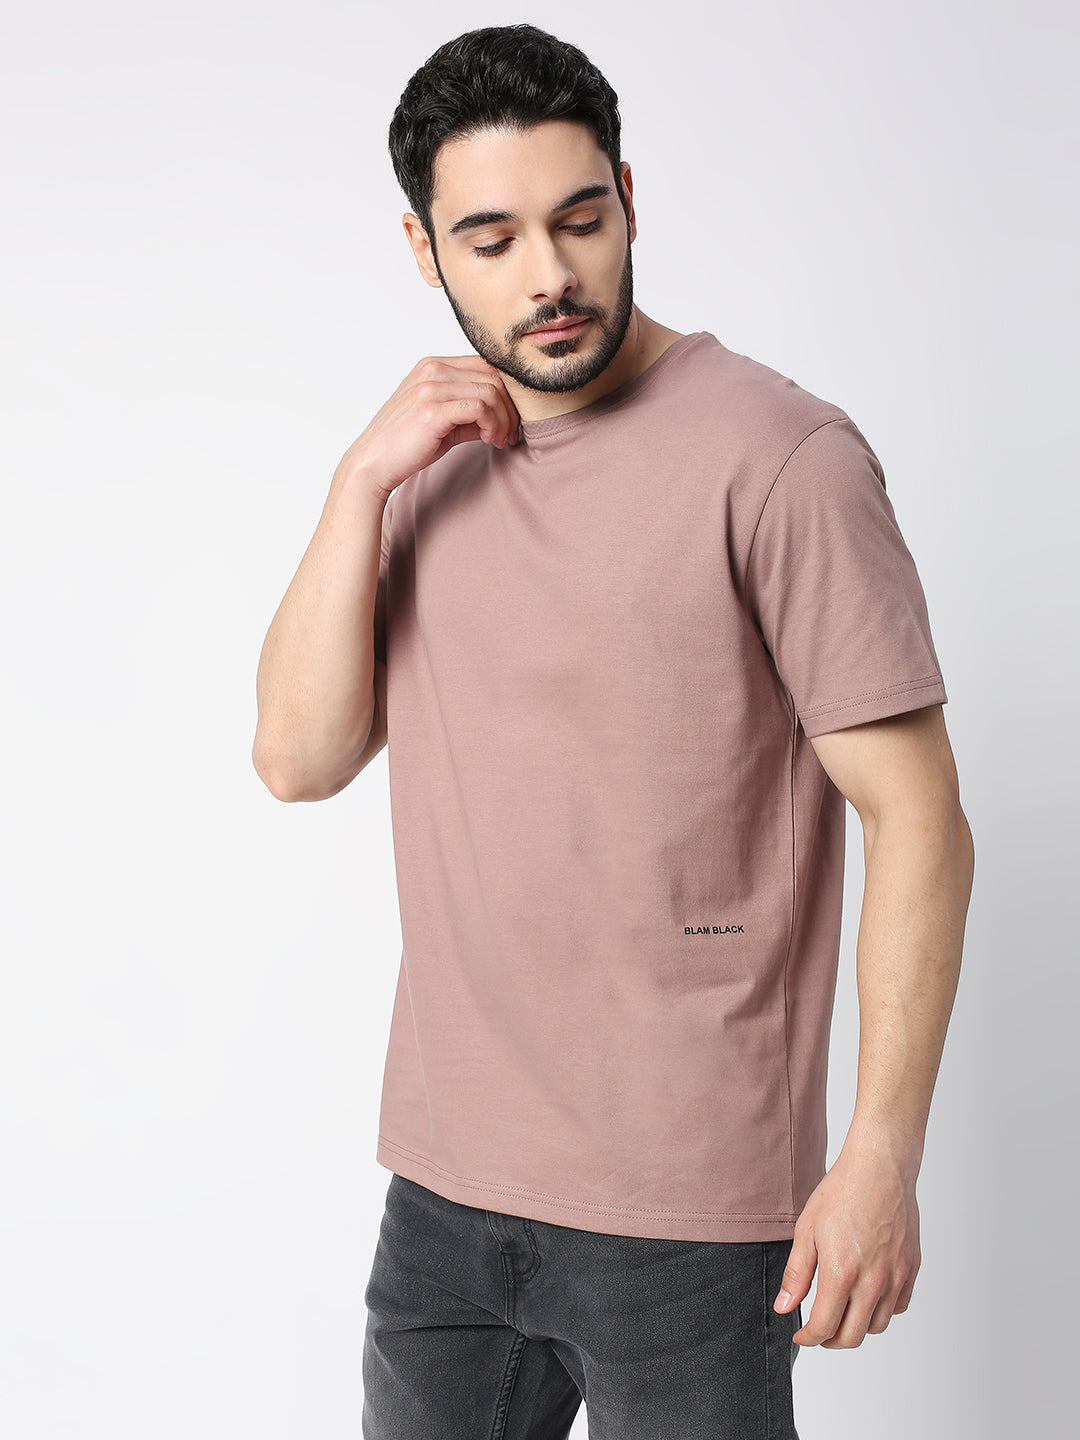 Buy Blamblack Solid Light Brown Half Sleeved T-shirt